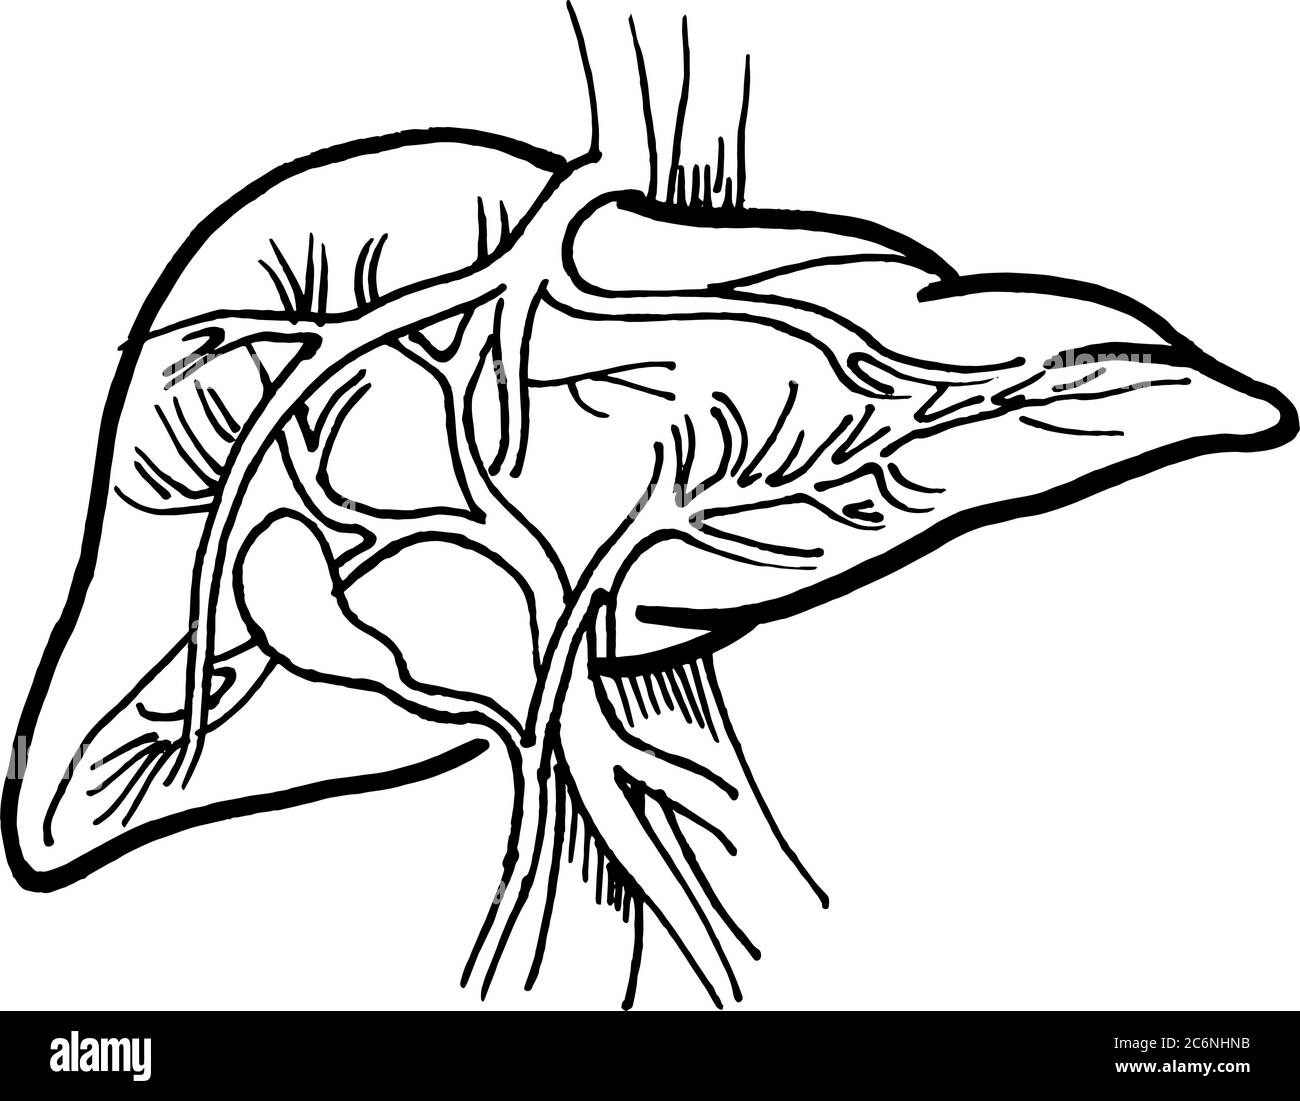 Contour vector outline drawing of human liver organ. Medical design editable template Stock Vector